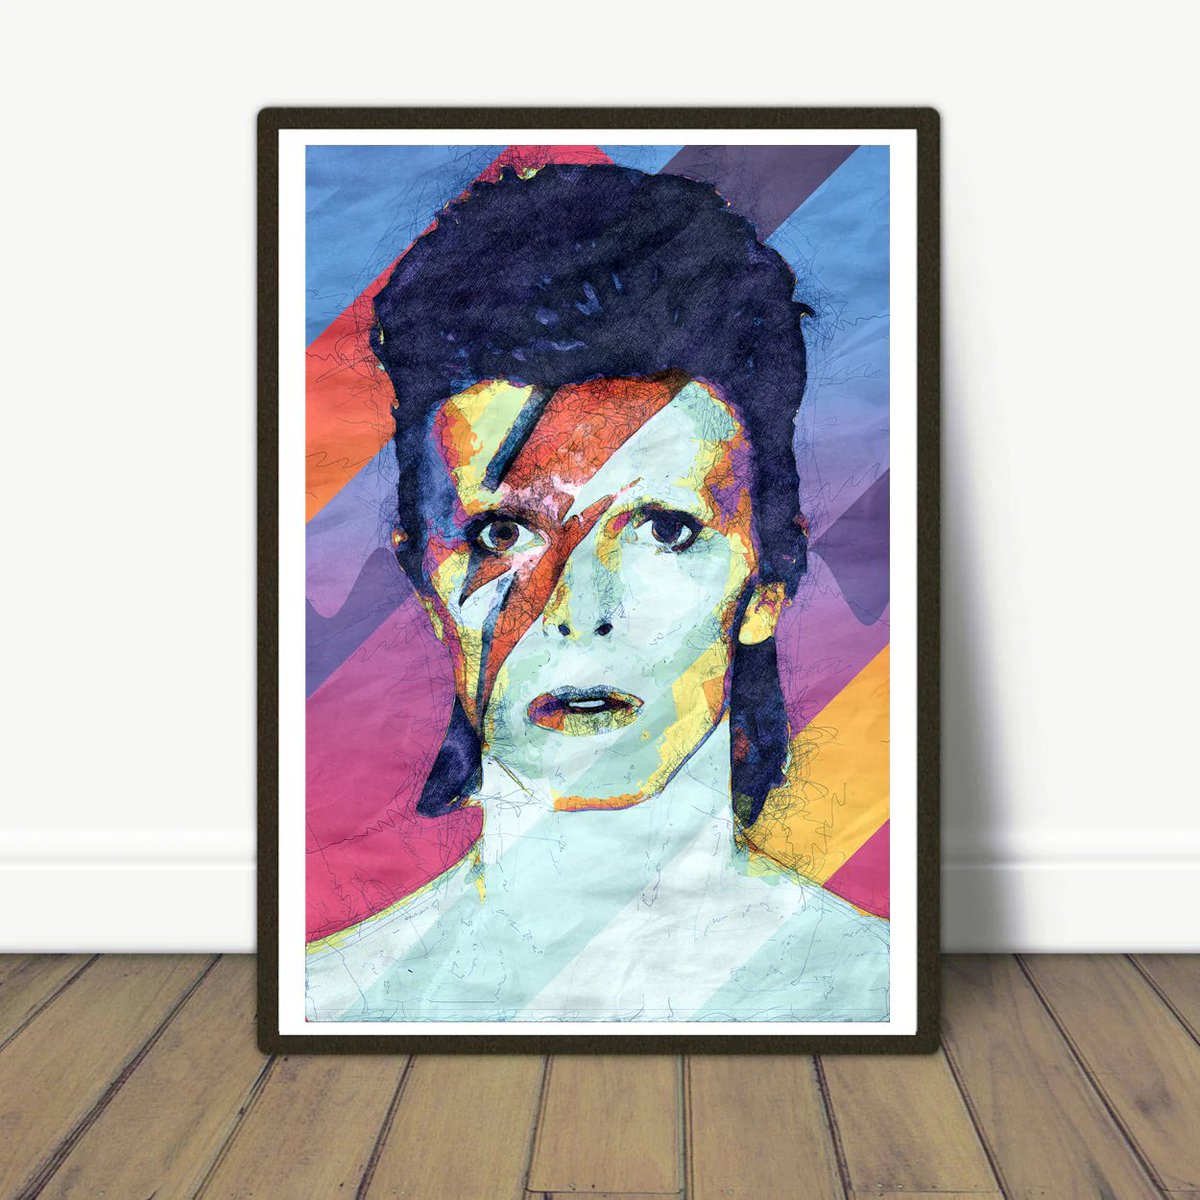 “David Bowie Ziggy Stardust - Pop Art Modern Poster Stylized Art no. 1” artcursor.com/products/david… 
#limitedtimeoffer #discountsavailable #giftsforher #inspiringthoughts #artworkcollection #artworkoftheday #inspiringlife #artworkculture #artisticcreativity #shoponsale #DavidBowie